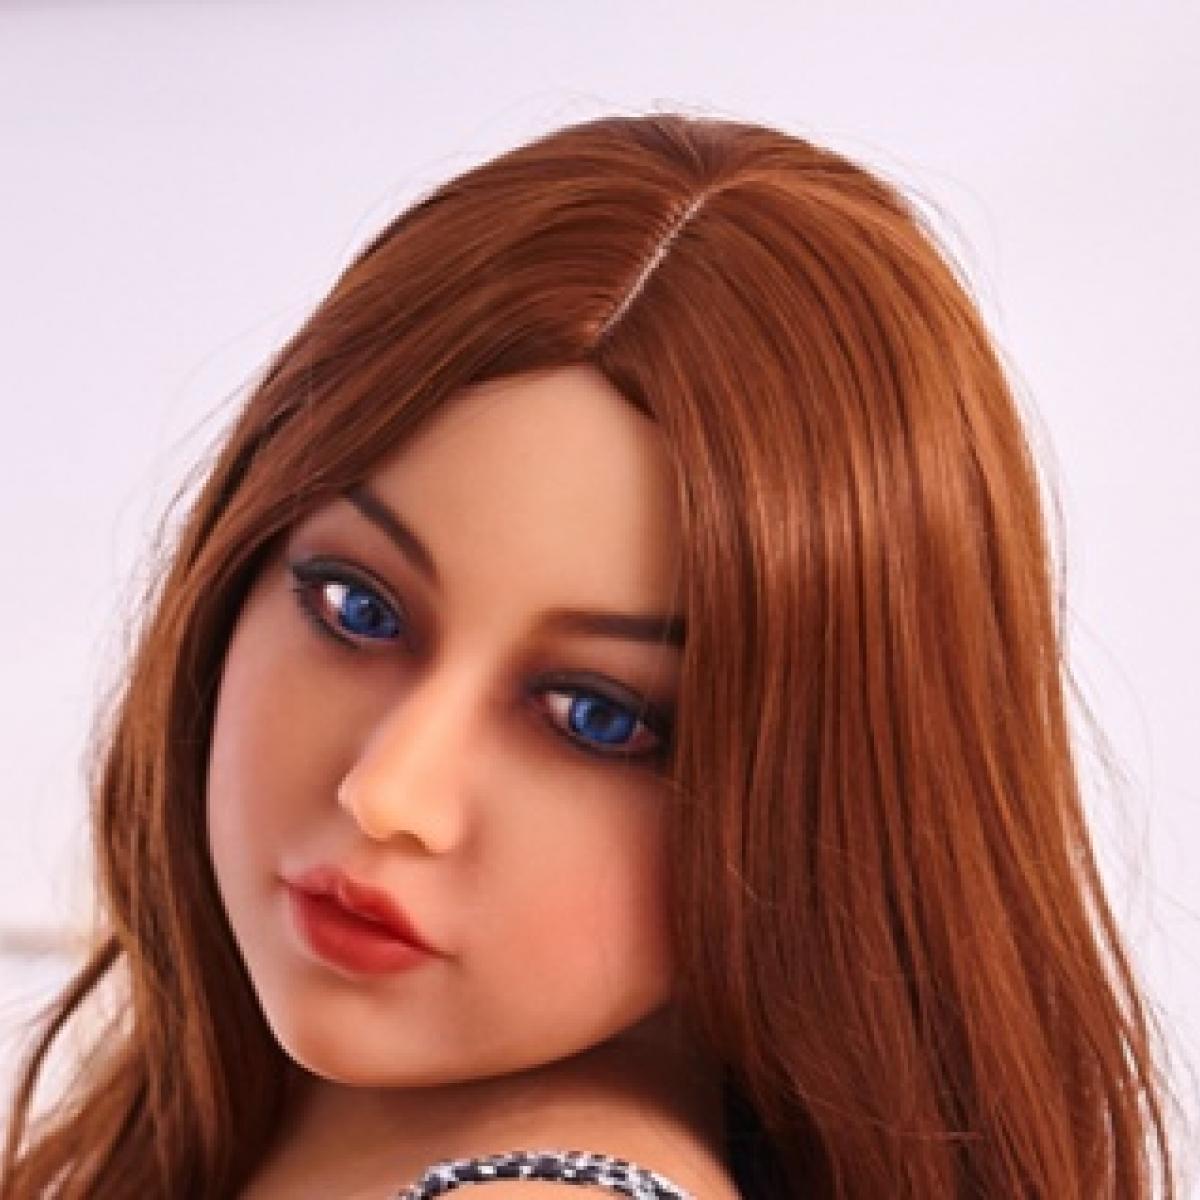 Neodoll Racy - 81 - Sex Doll Head - M16 Compatible - Tan